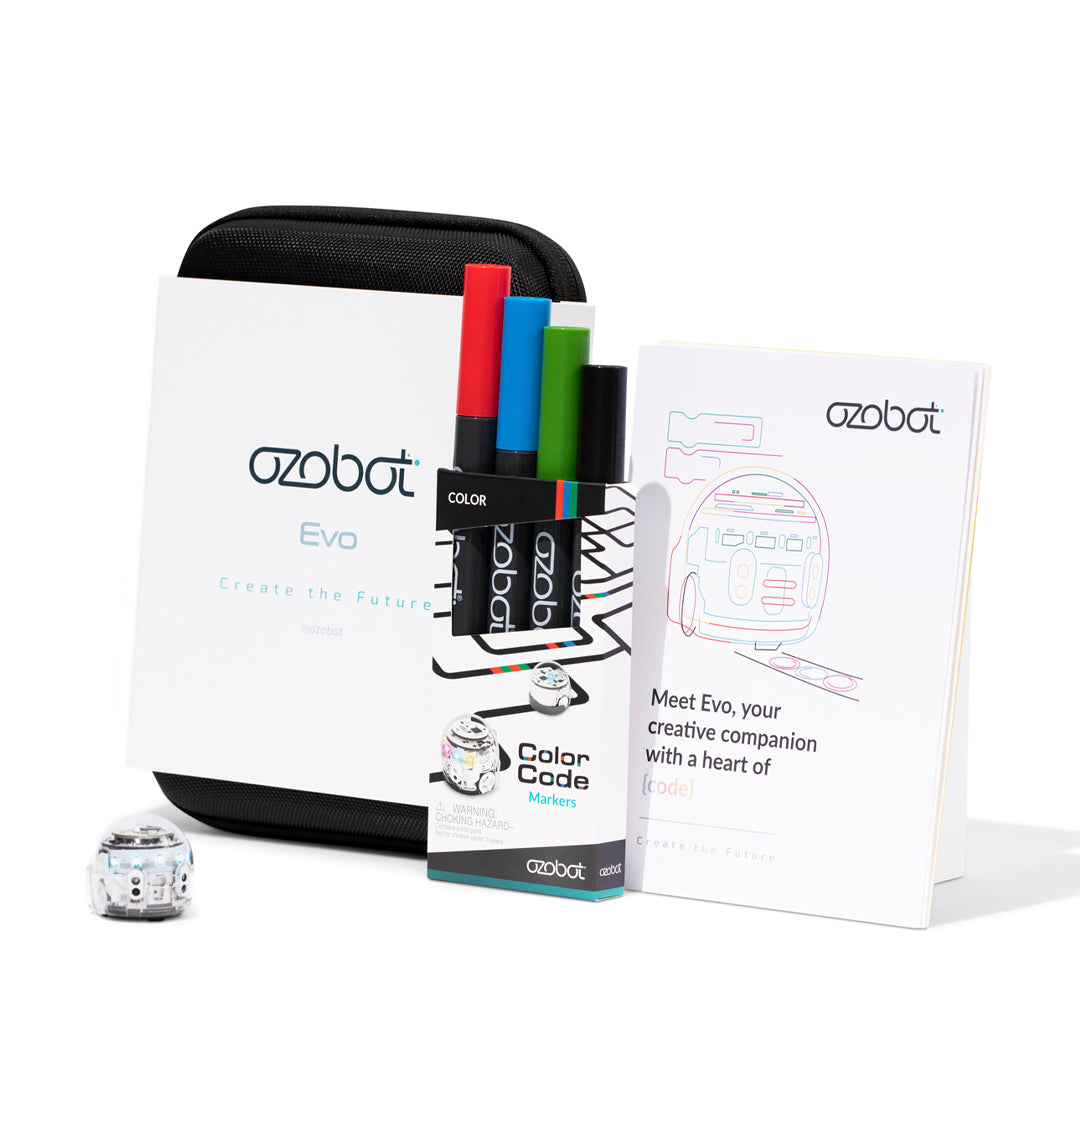 Ozobot Evo Entry Kit available in Australia from Sammat Education